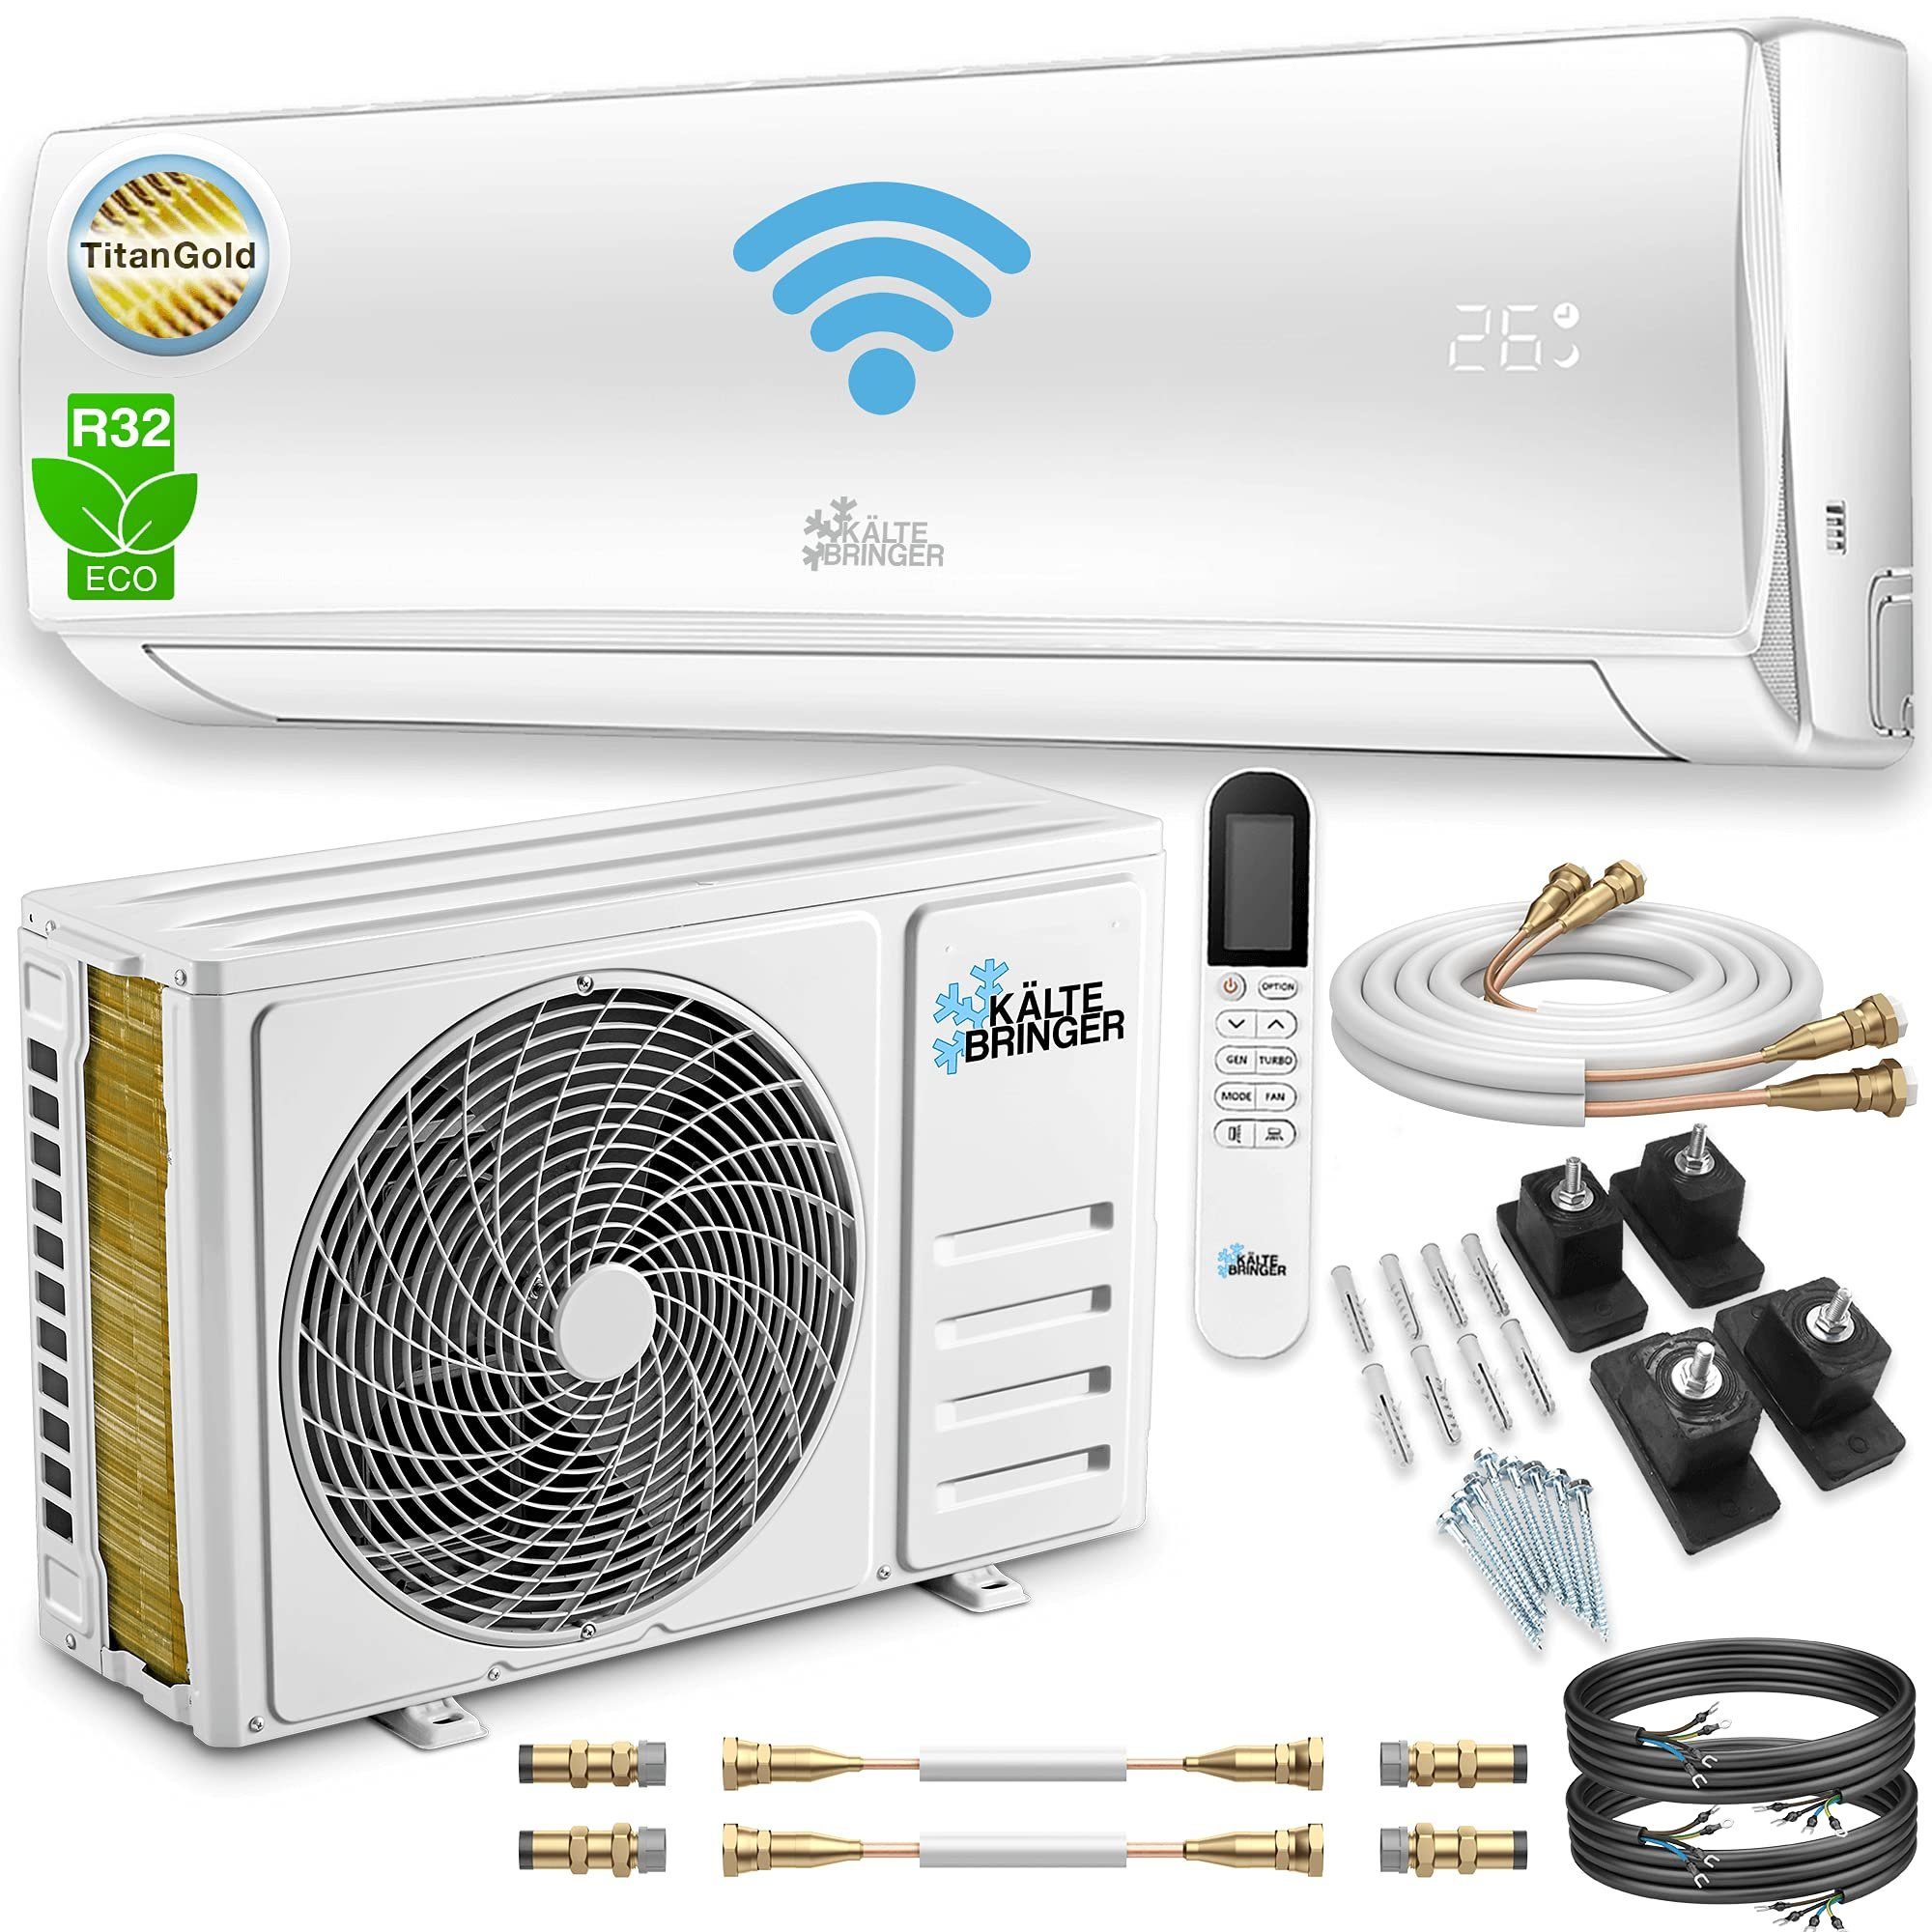 Kühlen/Heizen, Smart Quick Klimaanlage, Split-Klimagerät 3,4kW, App, inkl. Connect Bodenkonsole Kältebringer Split KB34-QC, Set